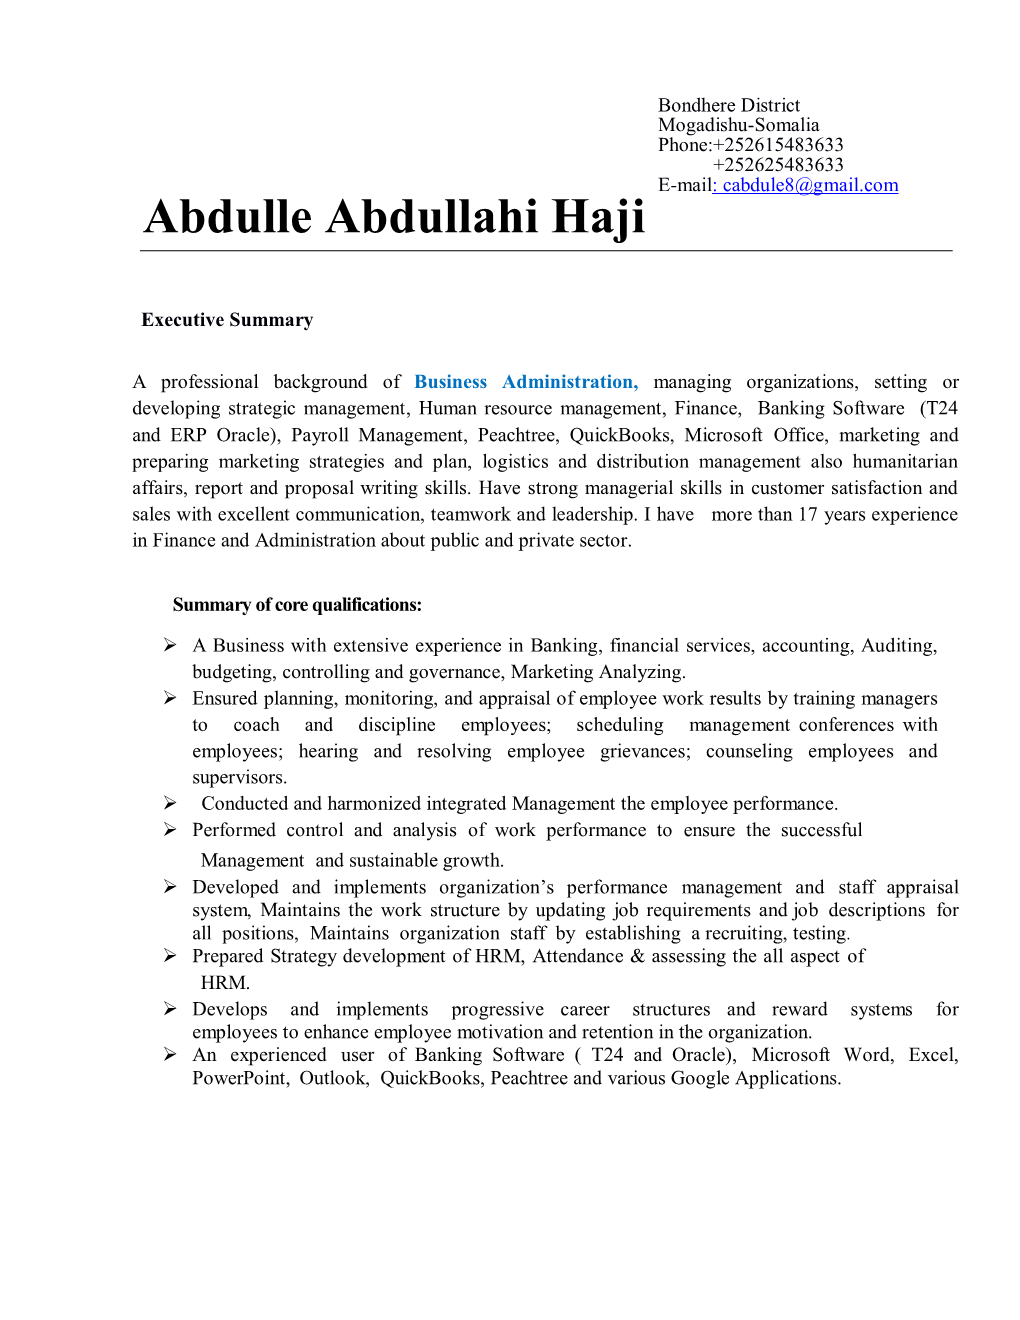 Abdulle Abdullahi Haji